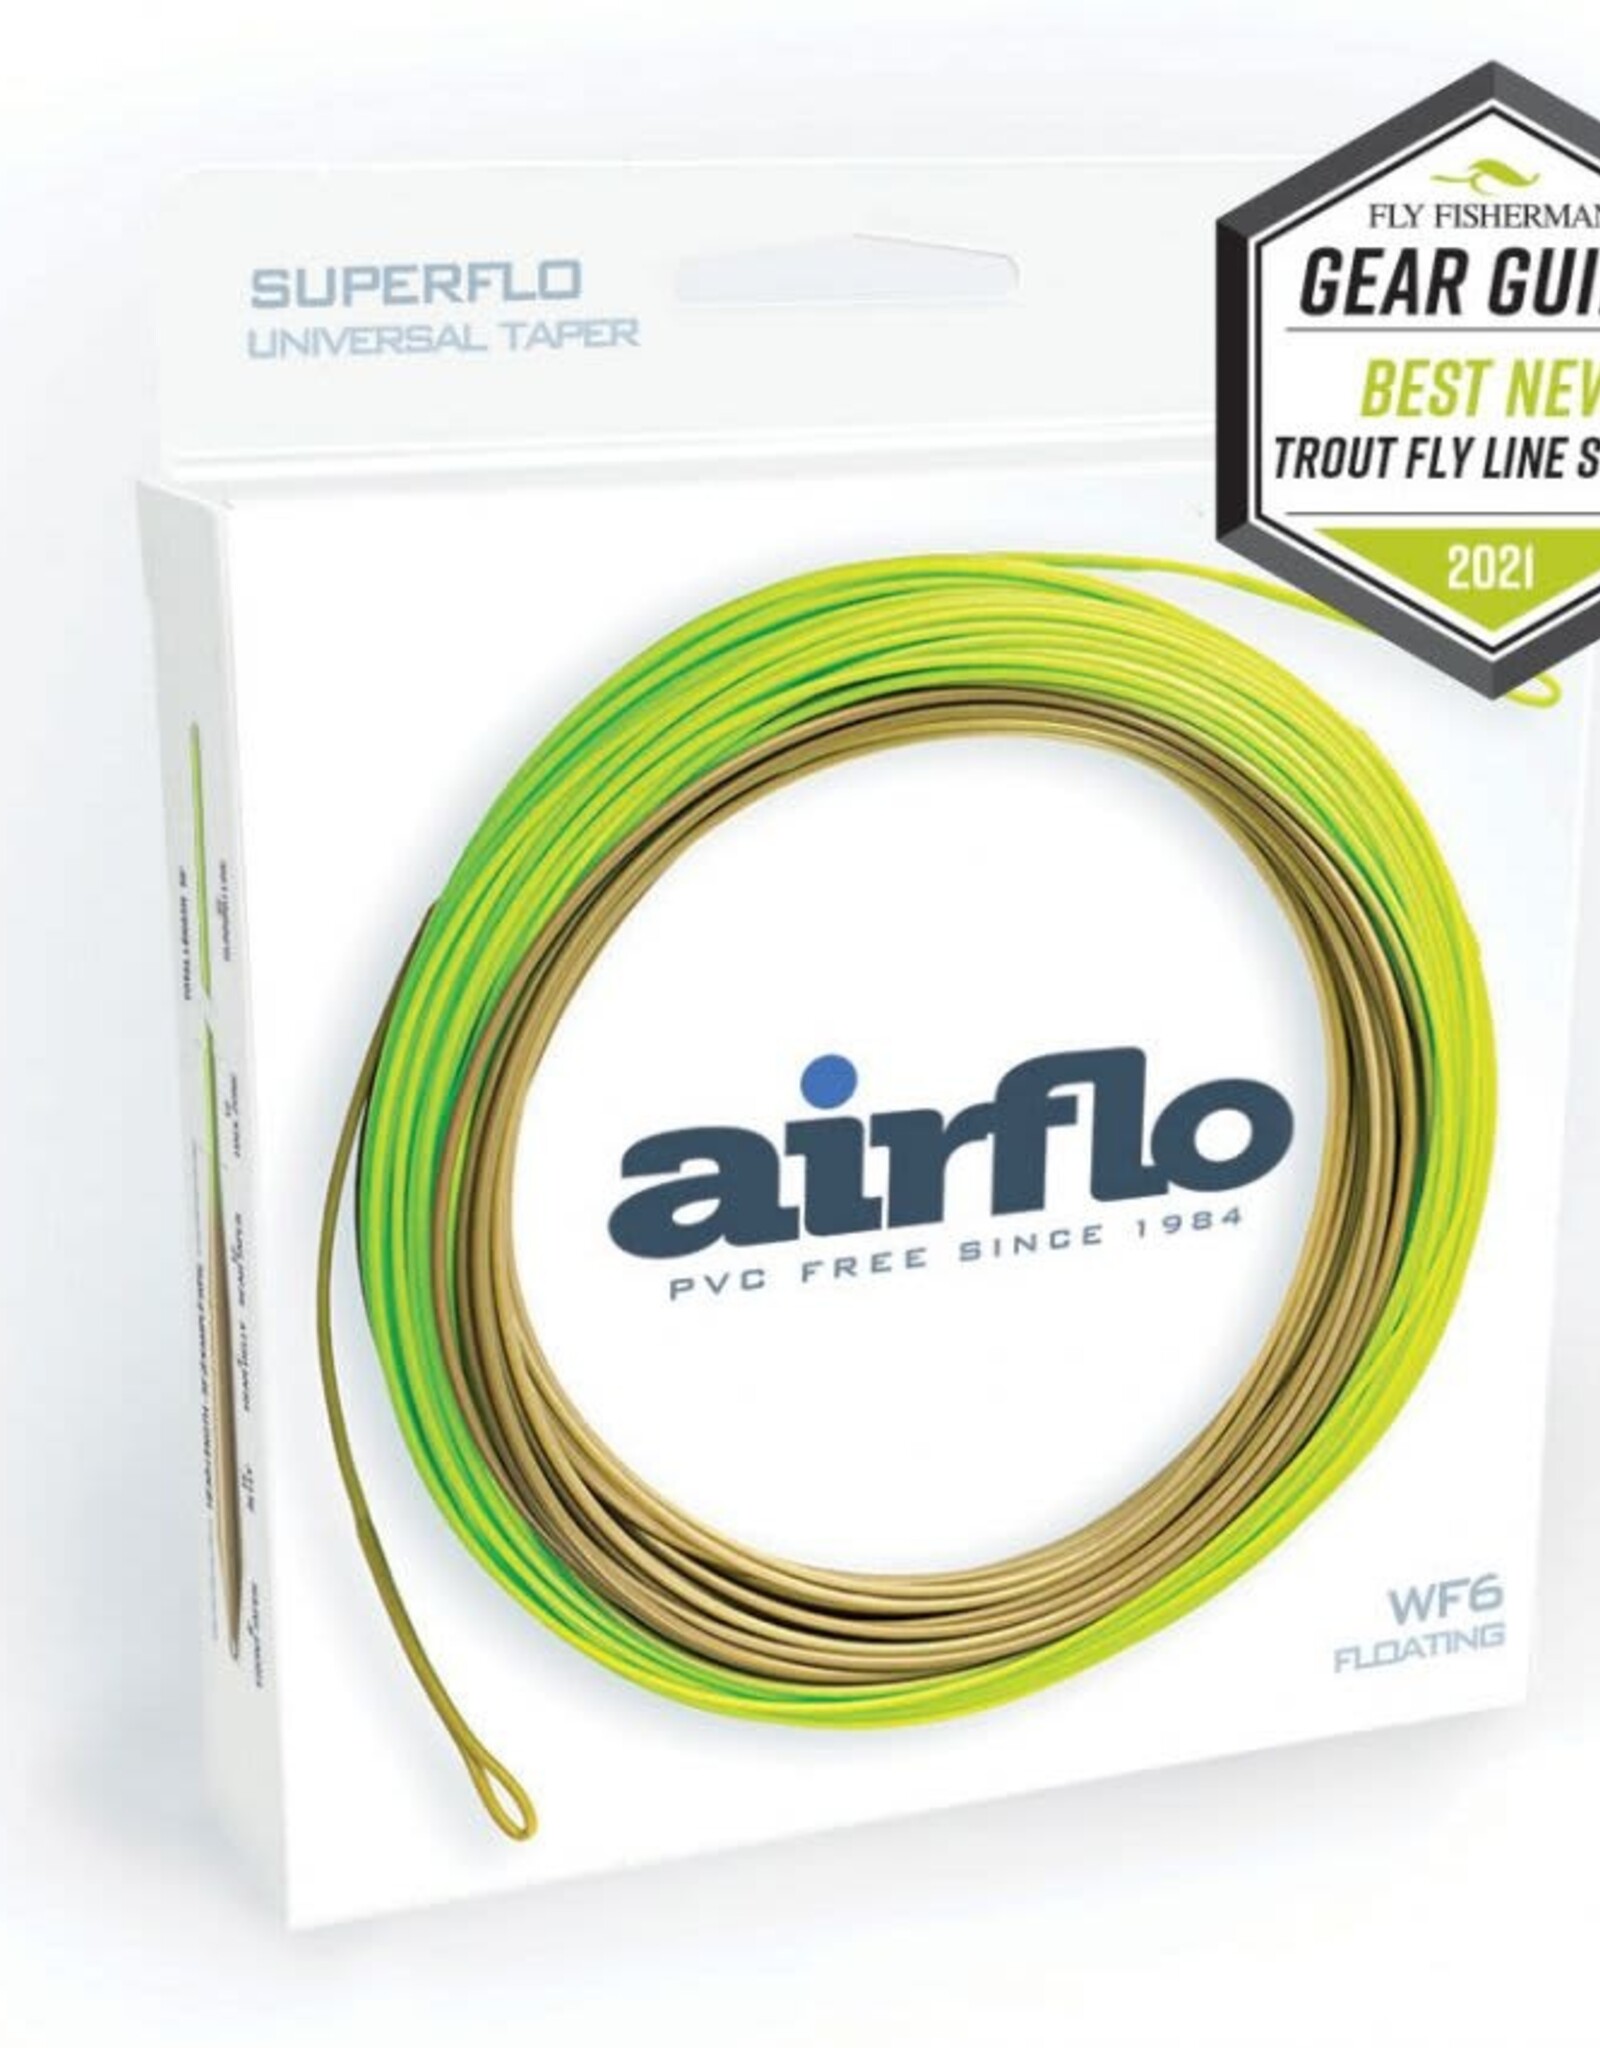 Airflo Airflo Superflo Universal Taper Ridge Tech 2.0